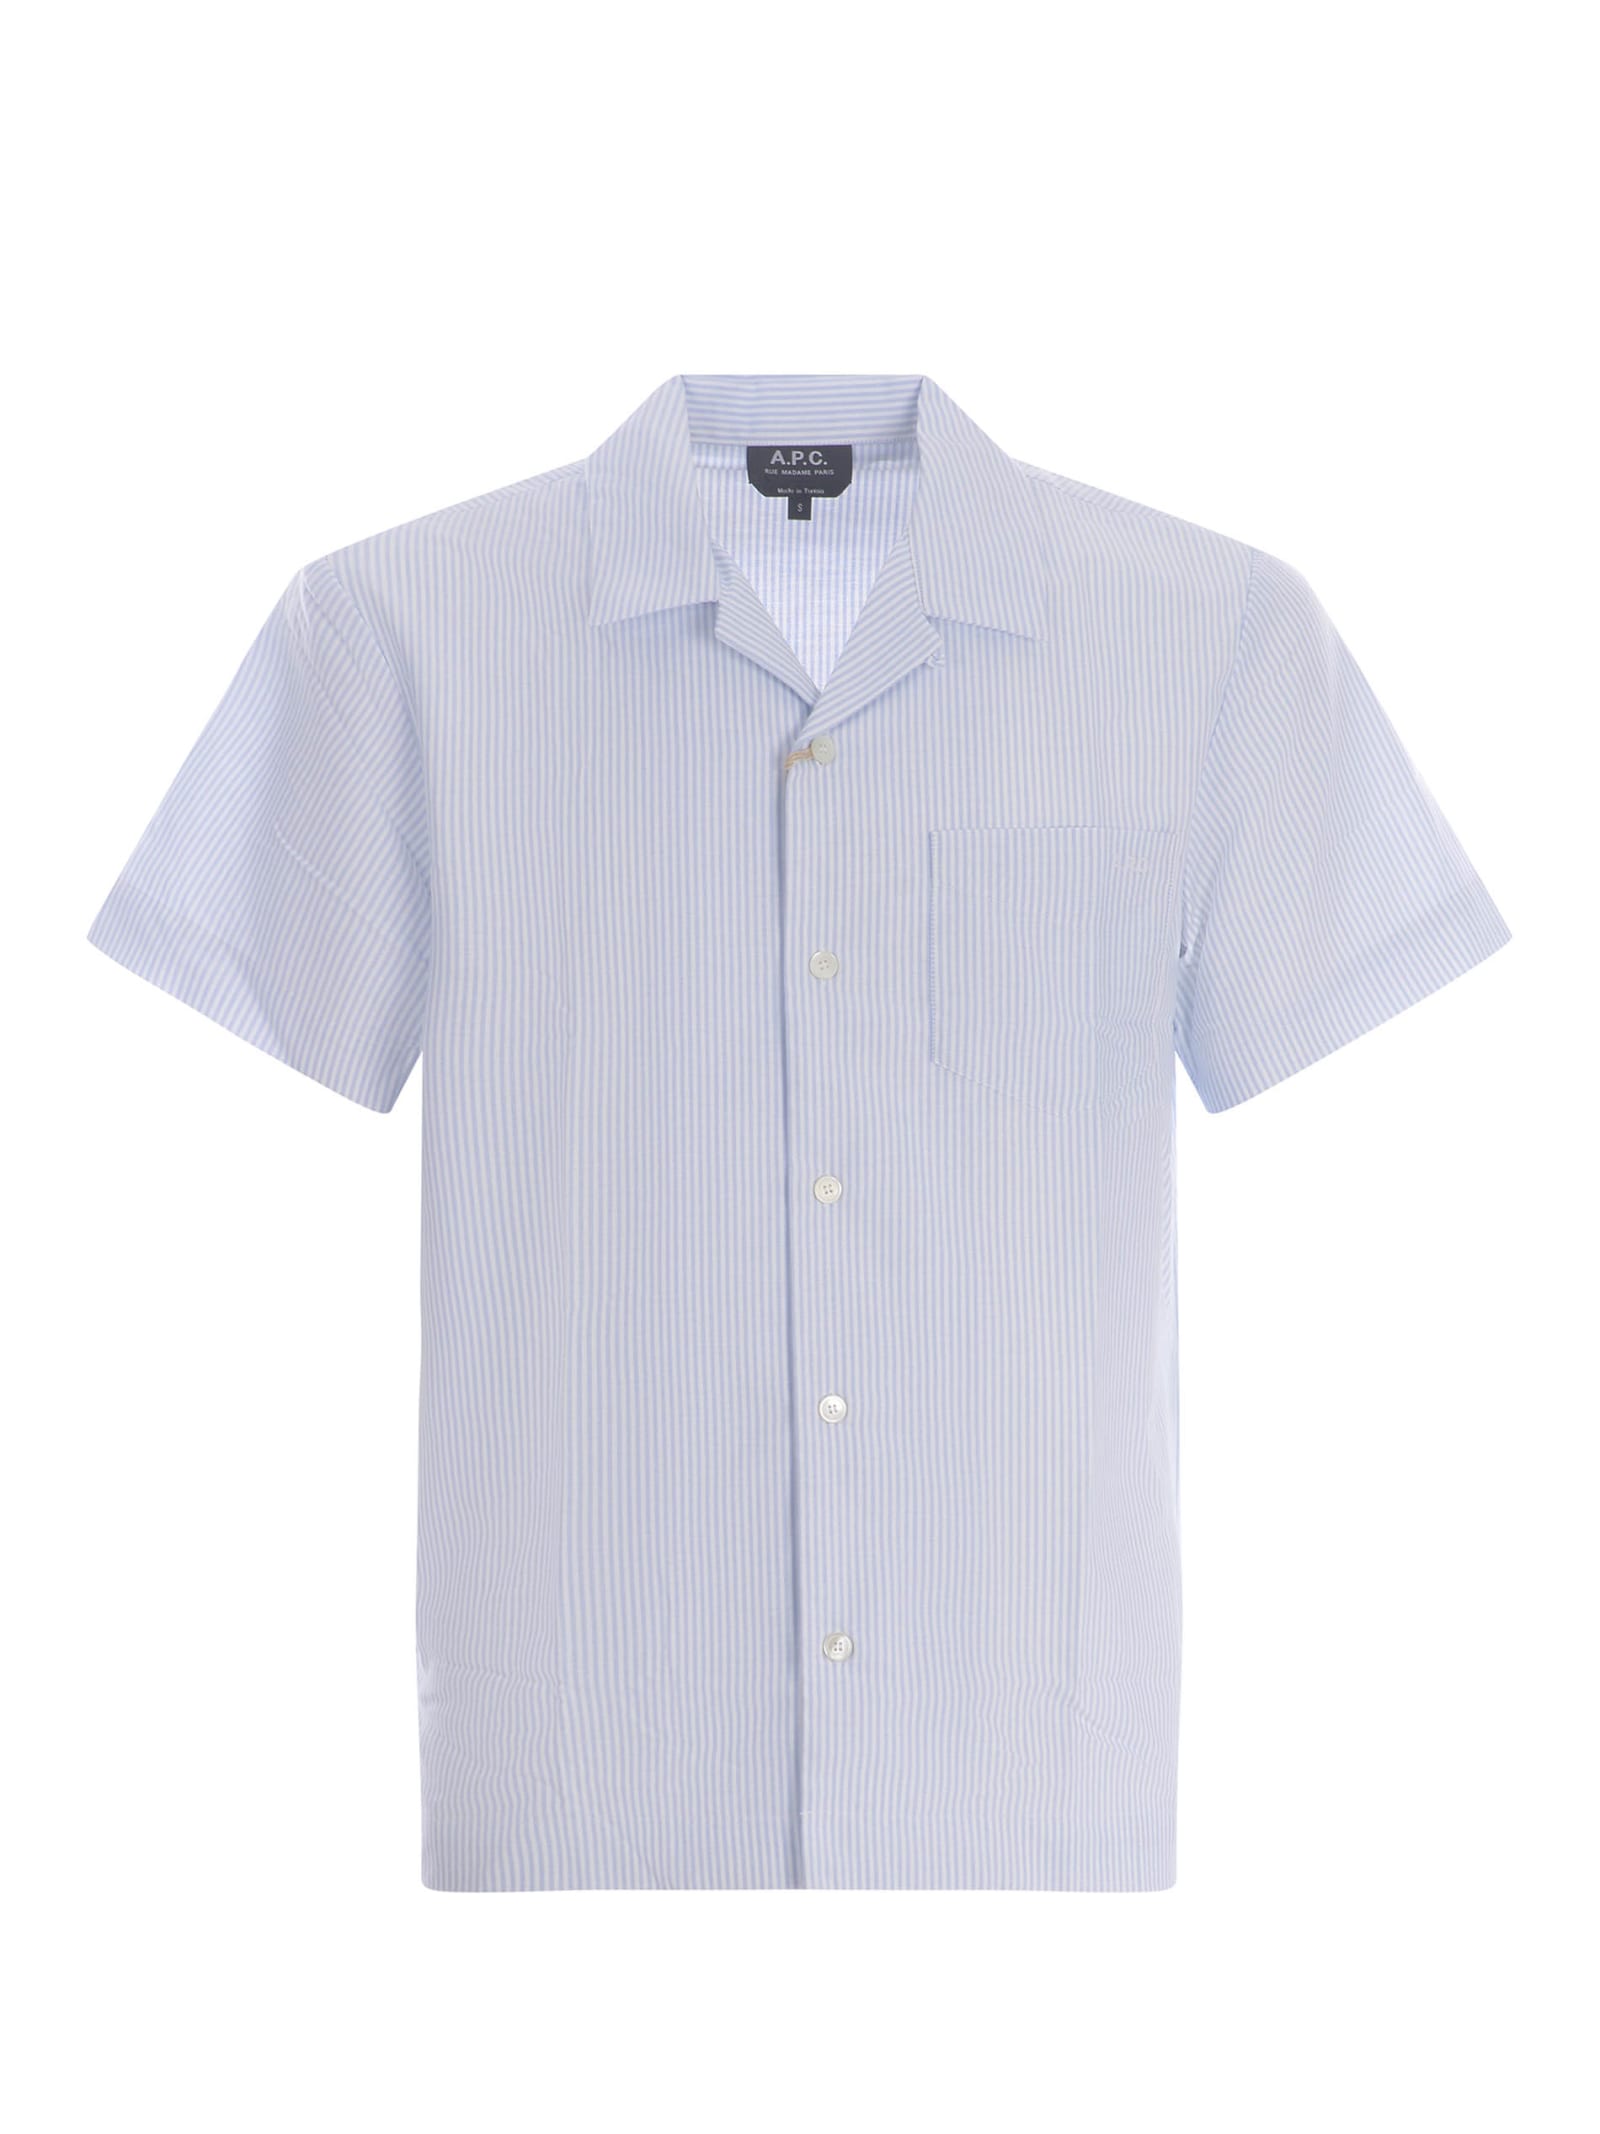 Shop Apc Shirt A.p.c. Lloyd Made Of Cotton In White